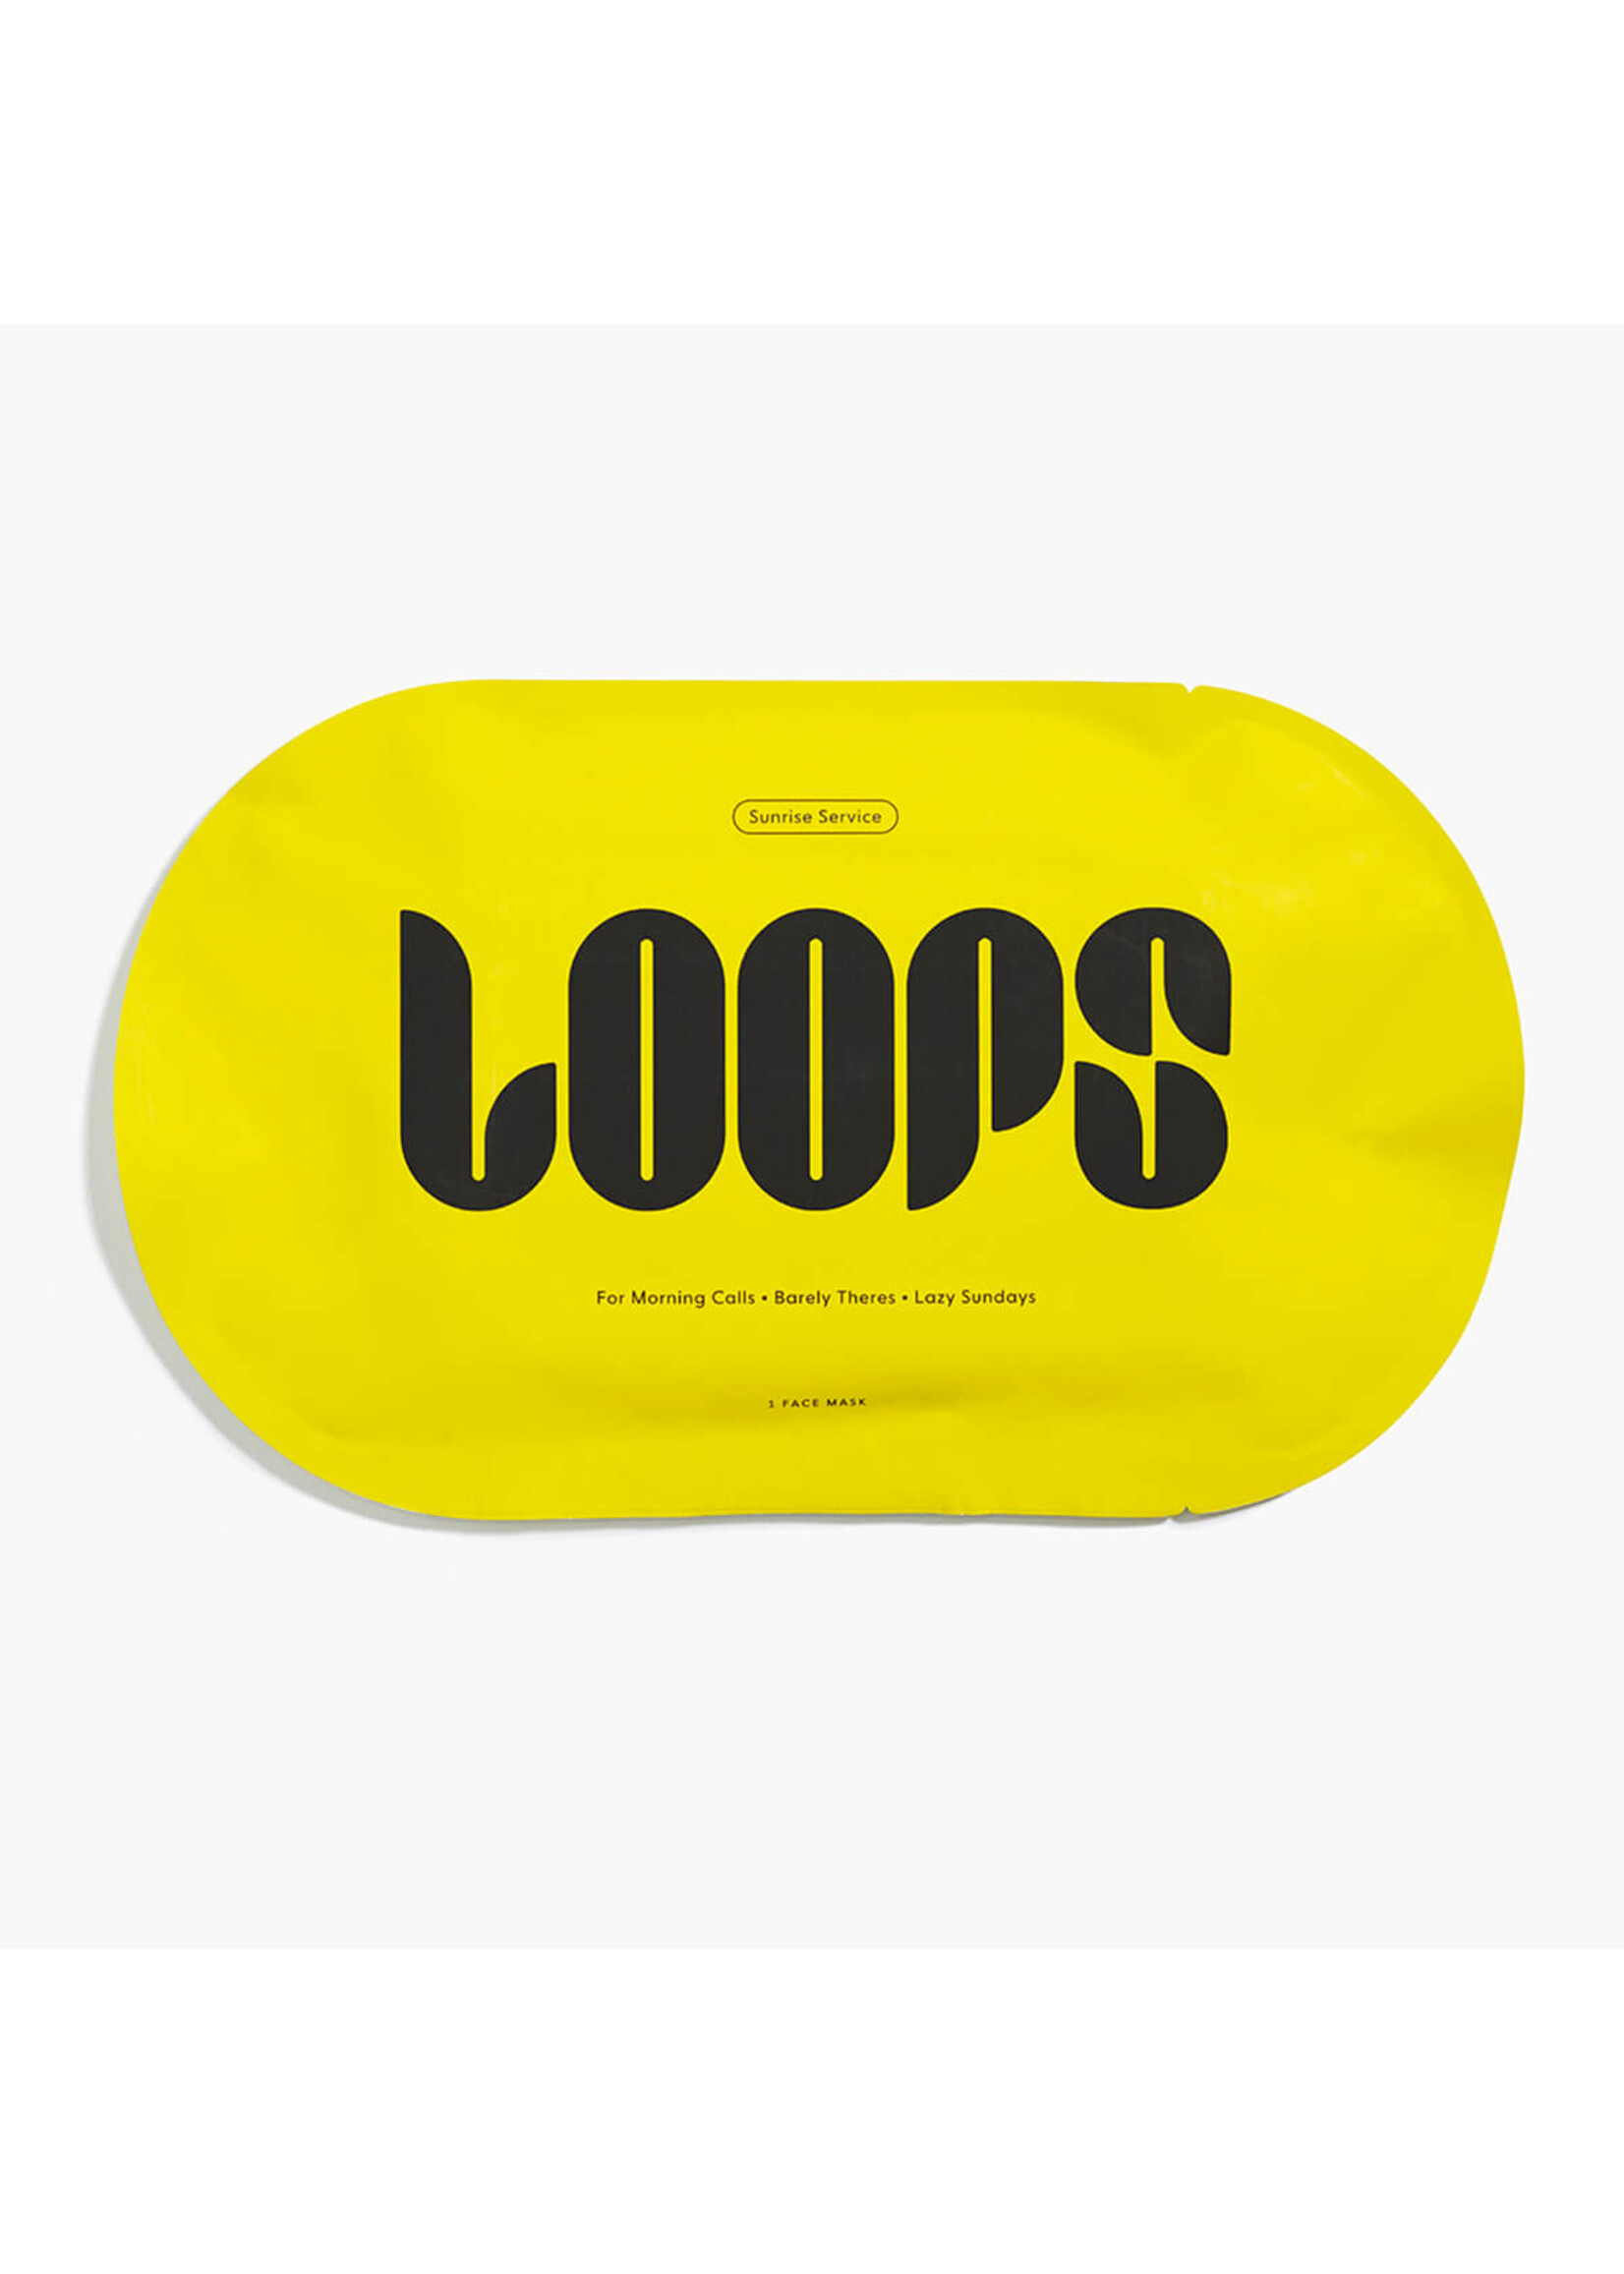 Loops Sheet masks by Loops Beauty